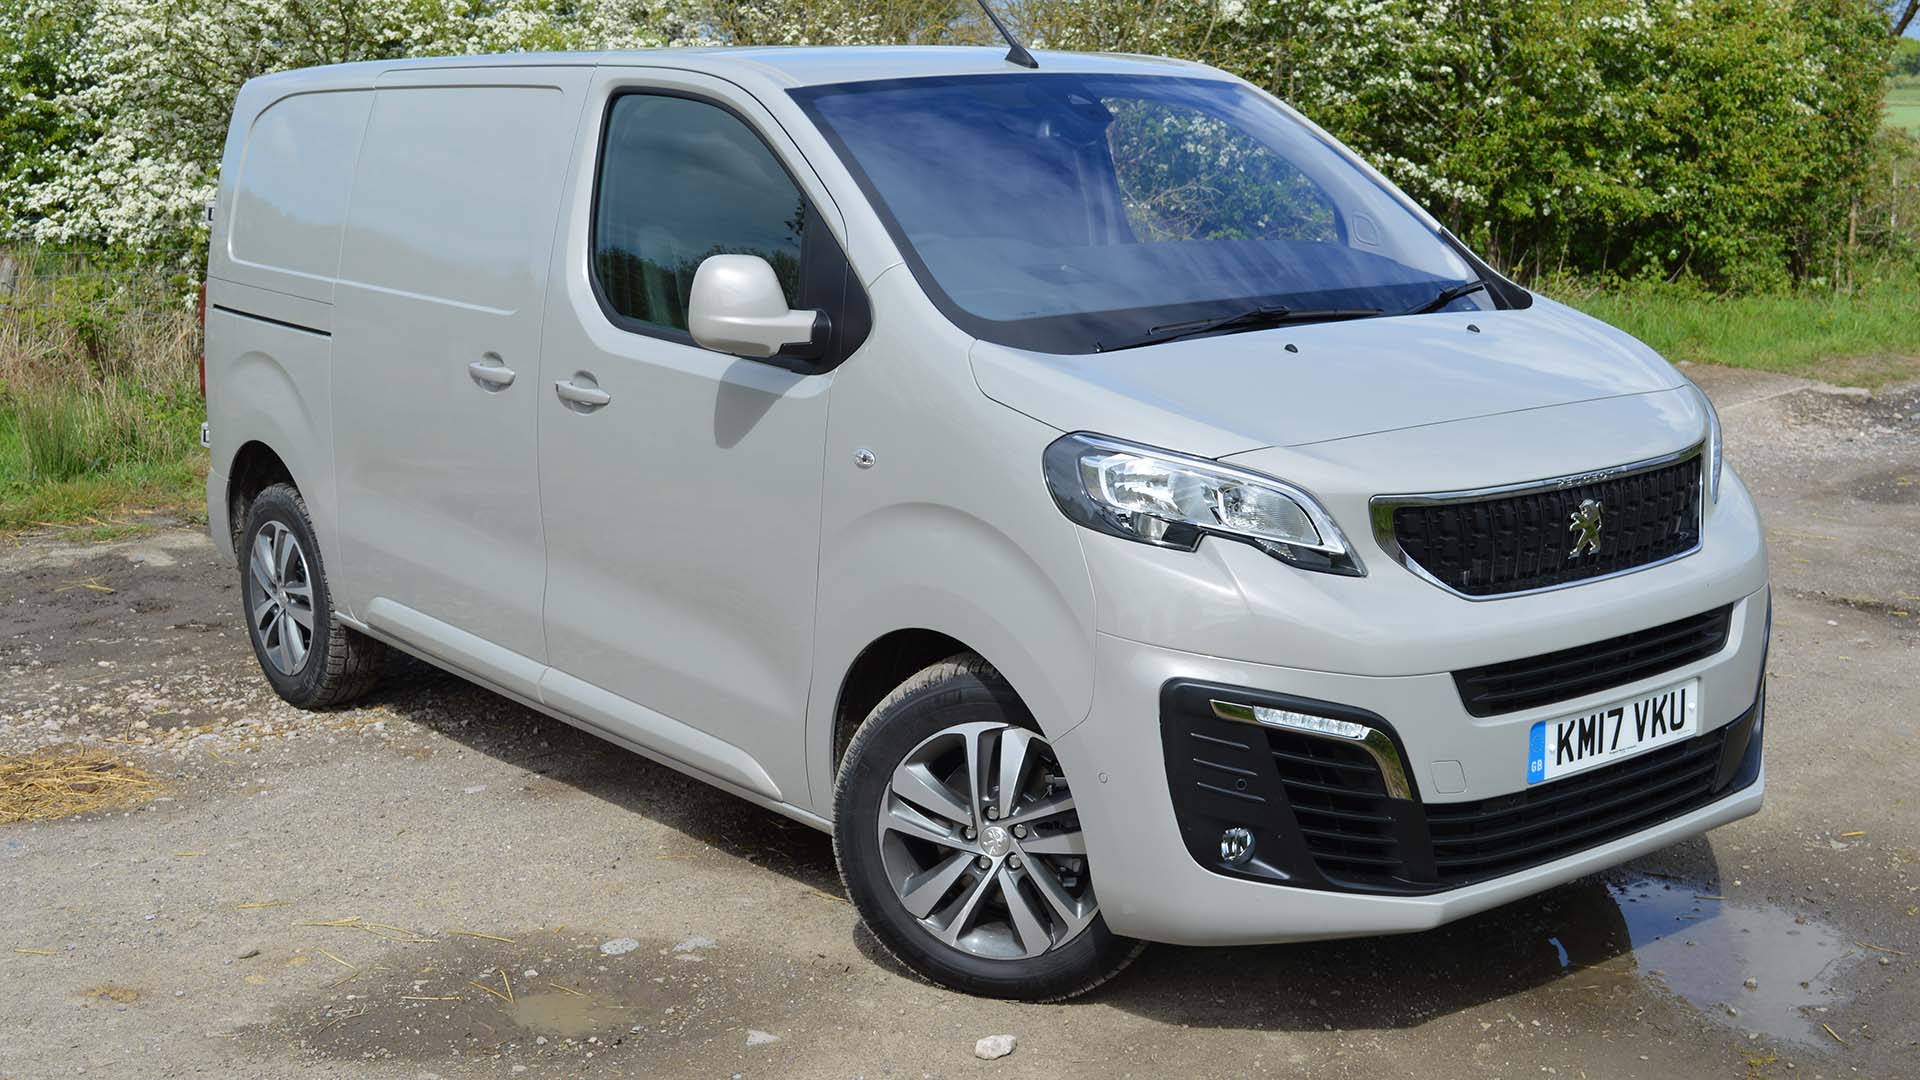 Used Peugeot Expert Vans for sale 